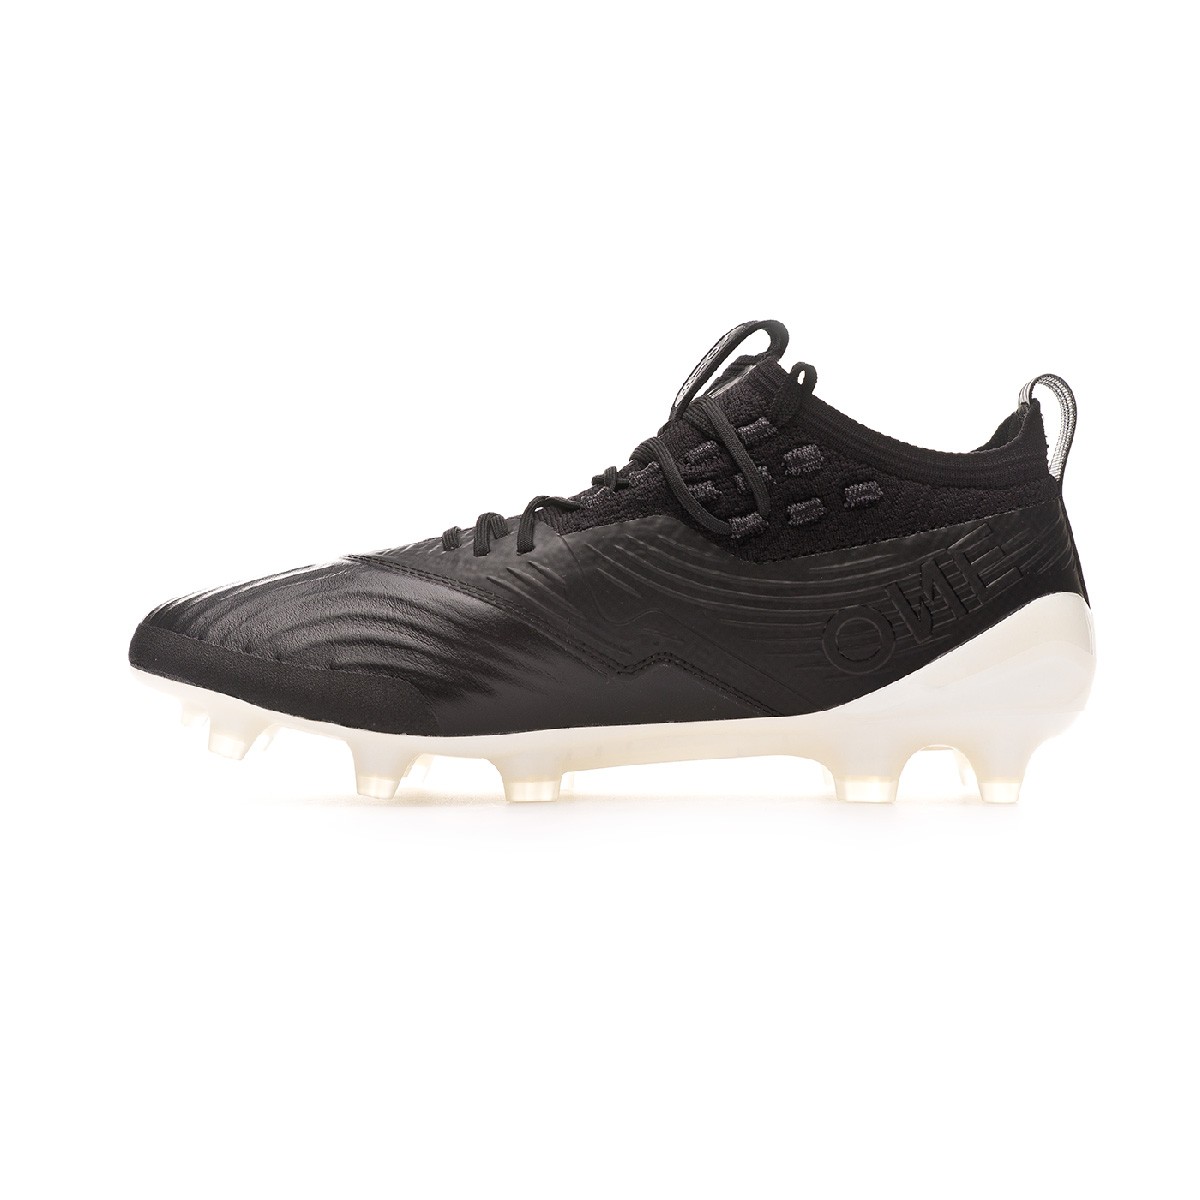 Zapatos de fútbol Puma One 19.1 FG/AG Black-White - Tienda de fútbol Fútbol  Emotion